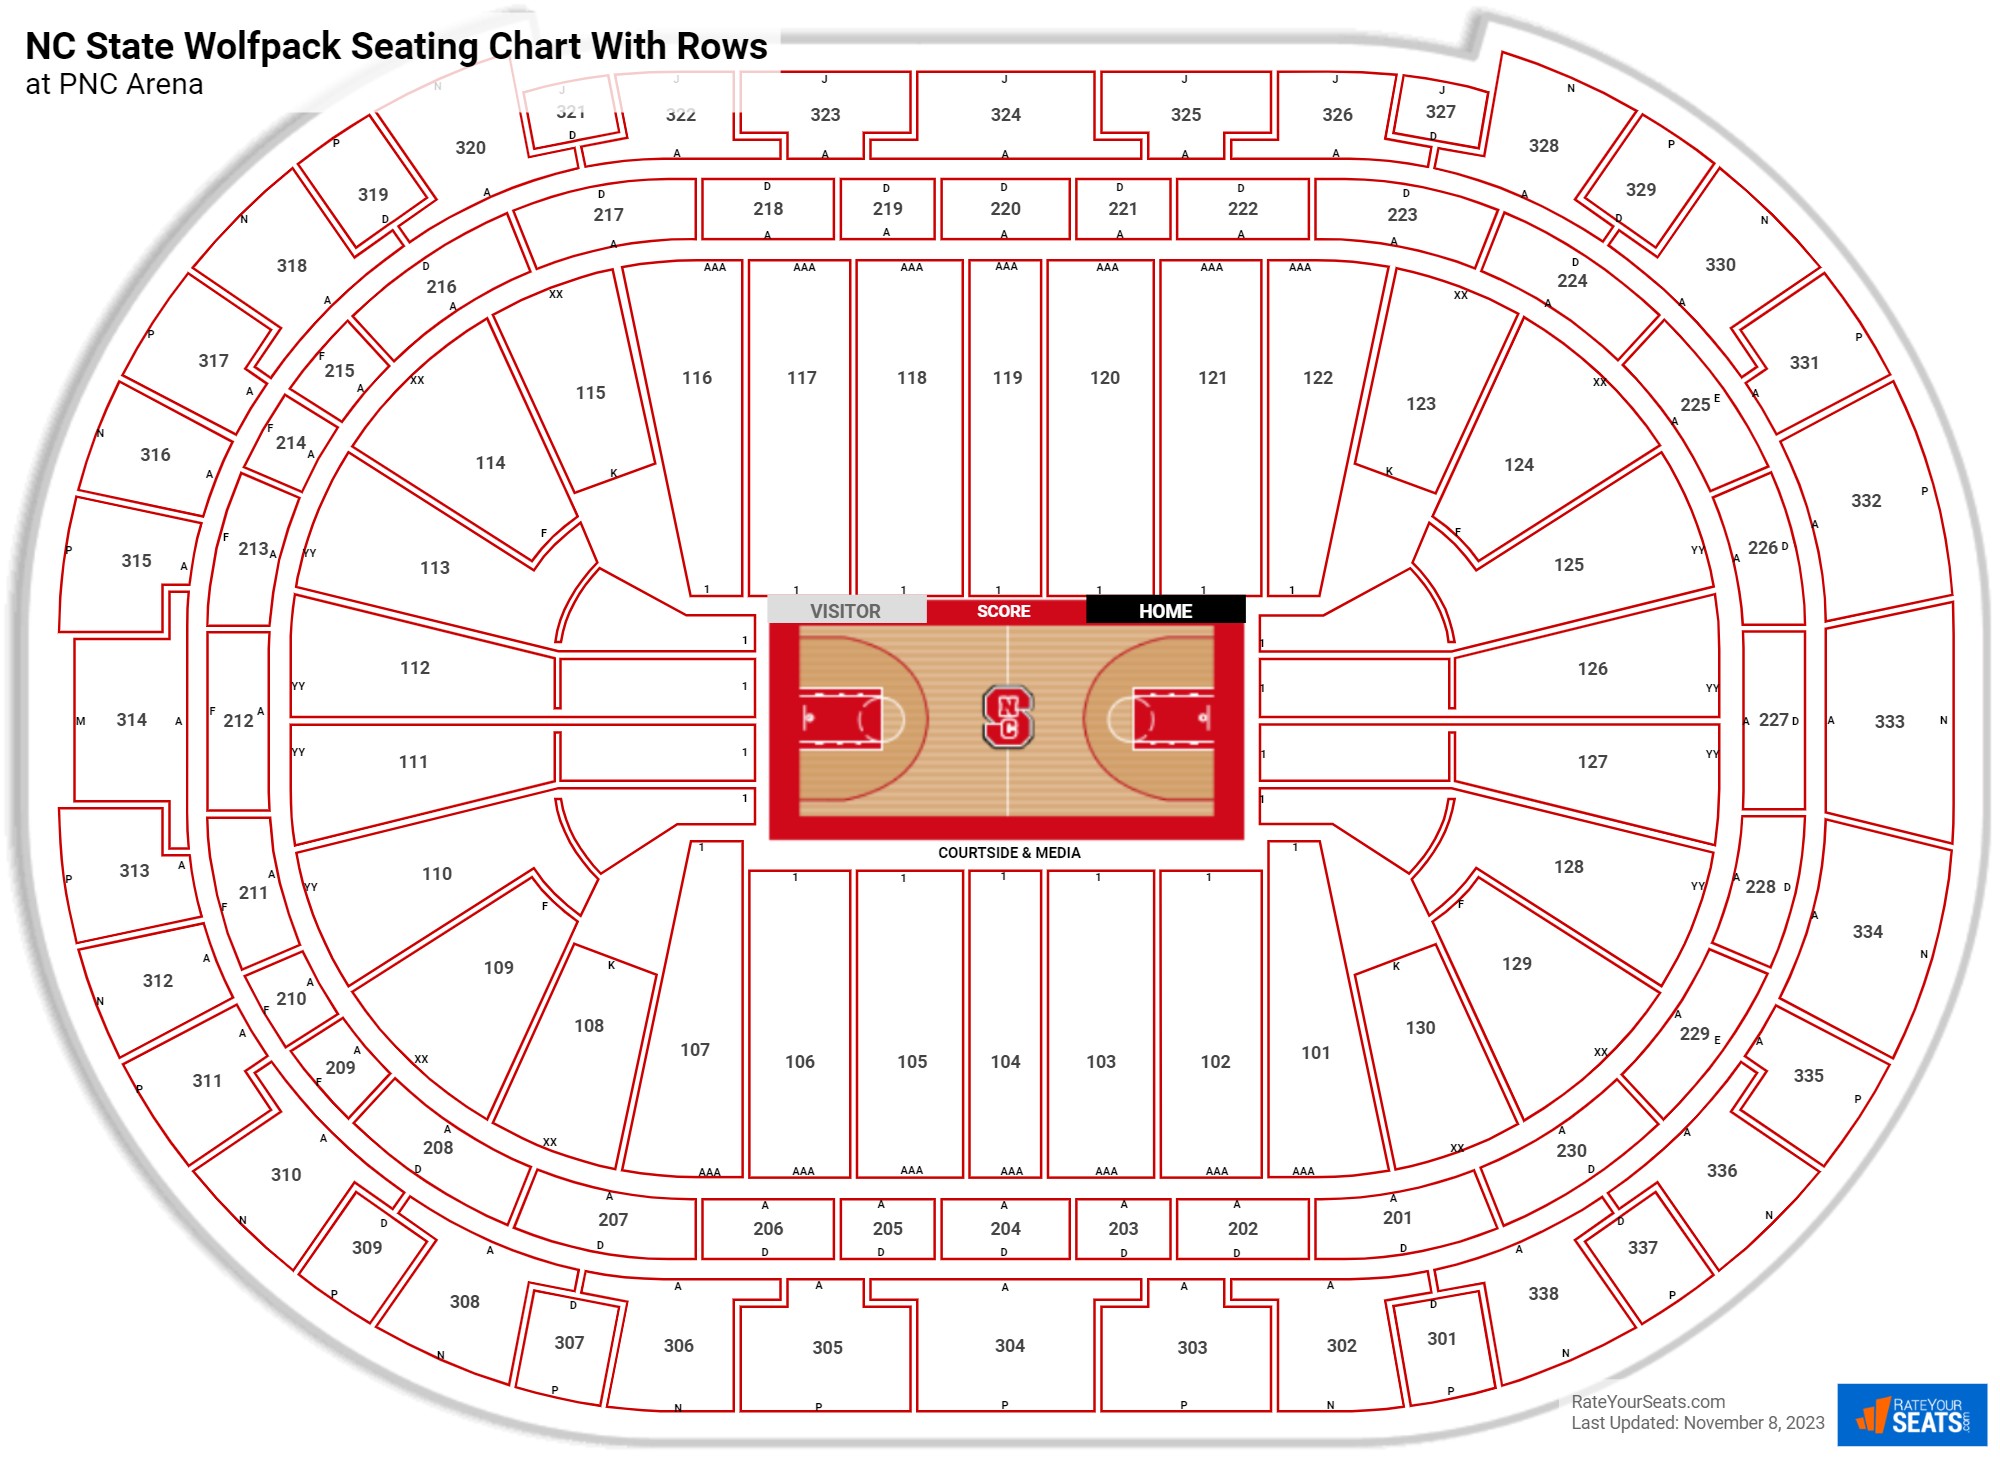 PNC Arena Seating for NC State Basketball